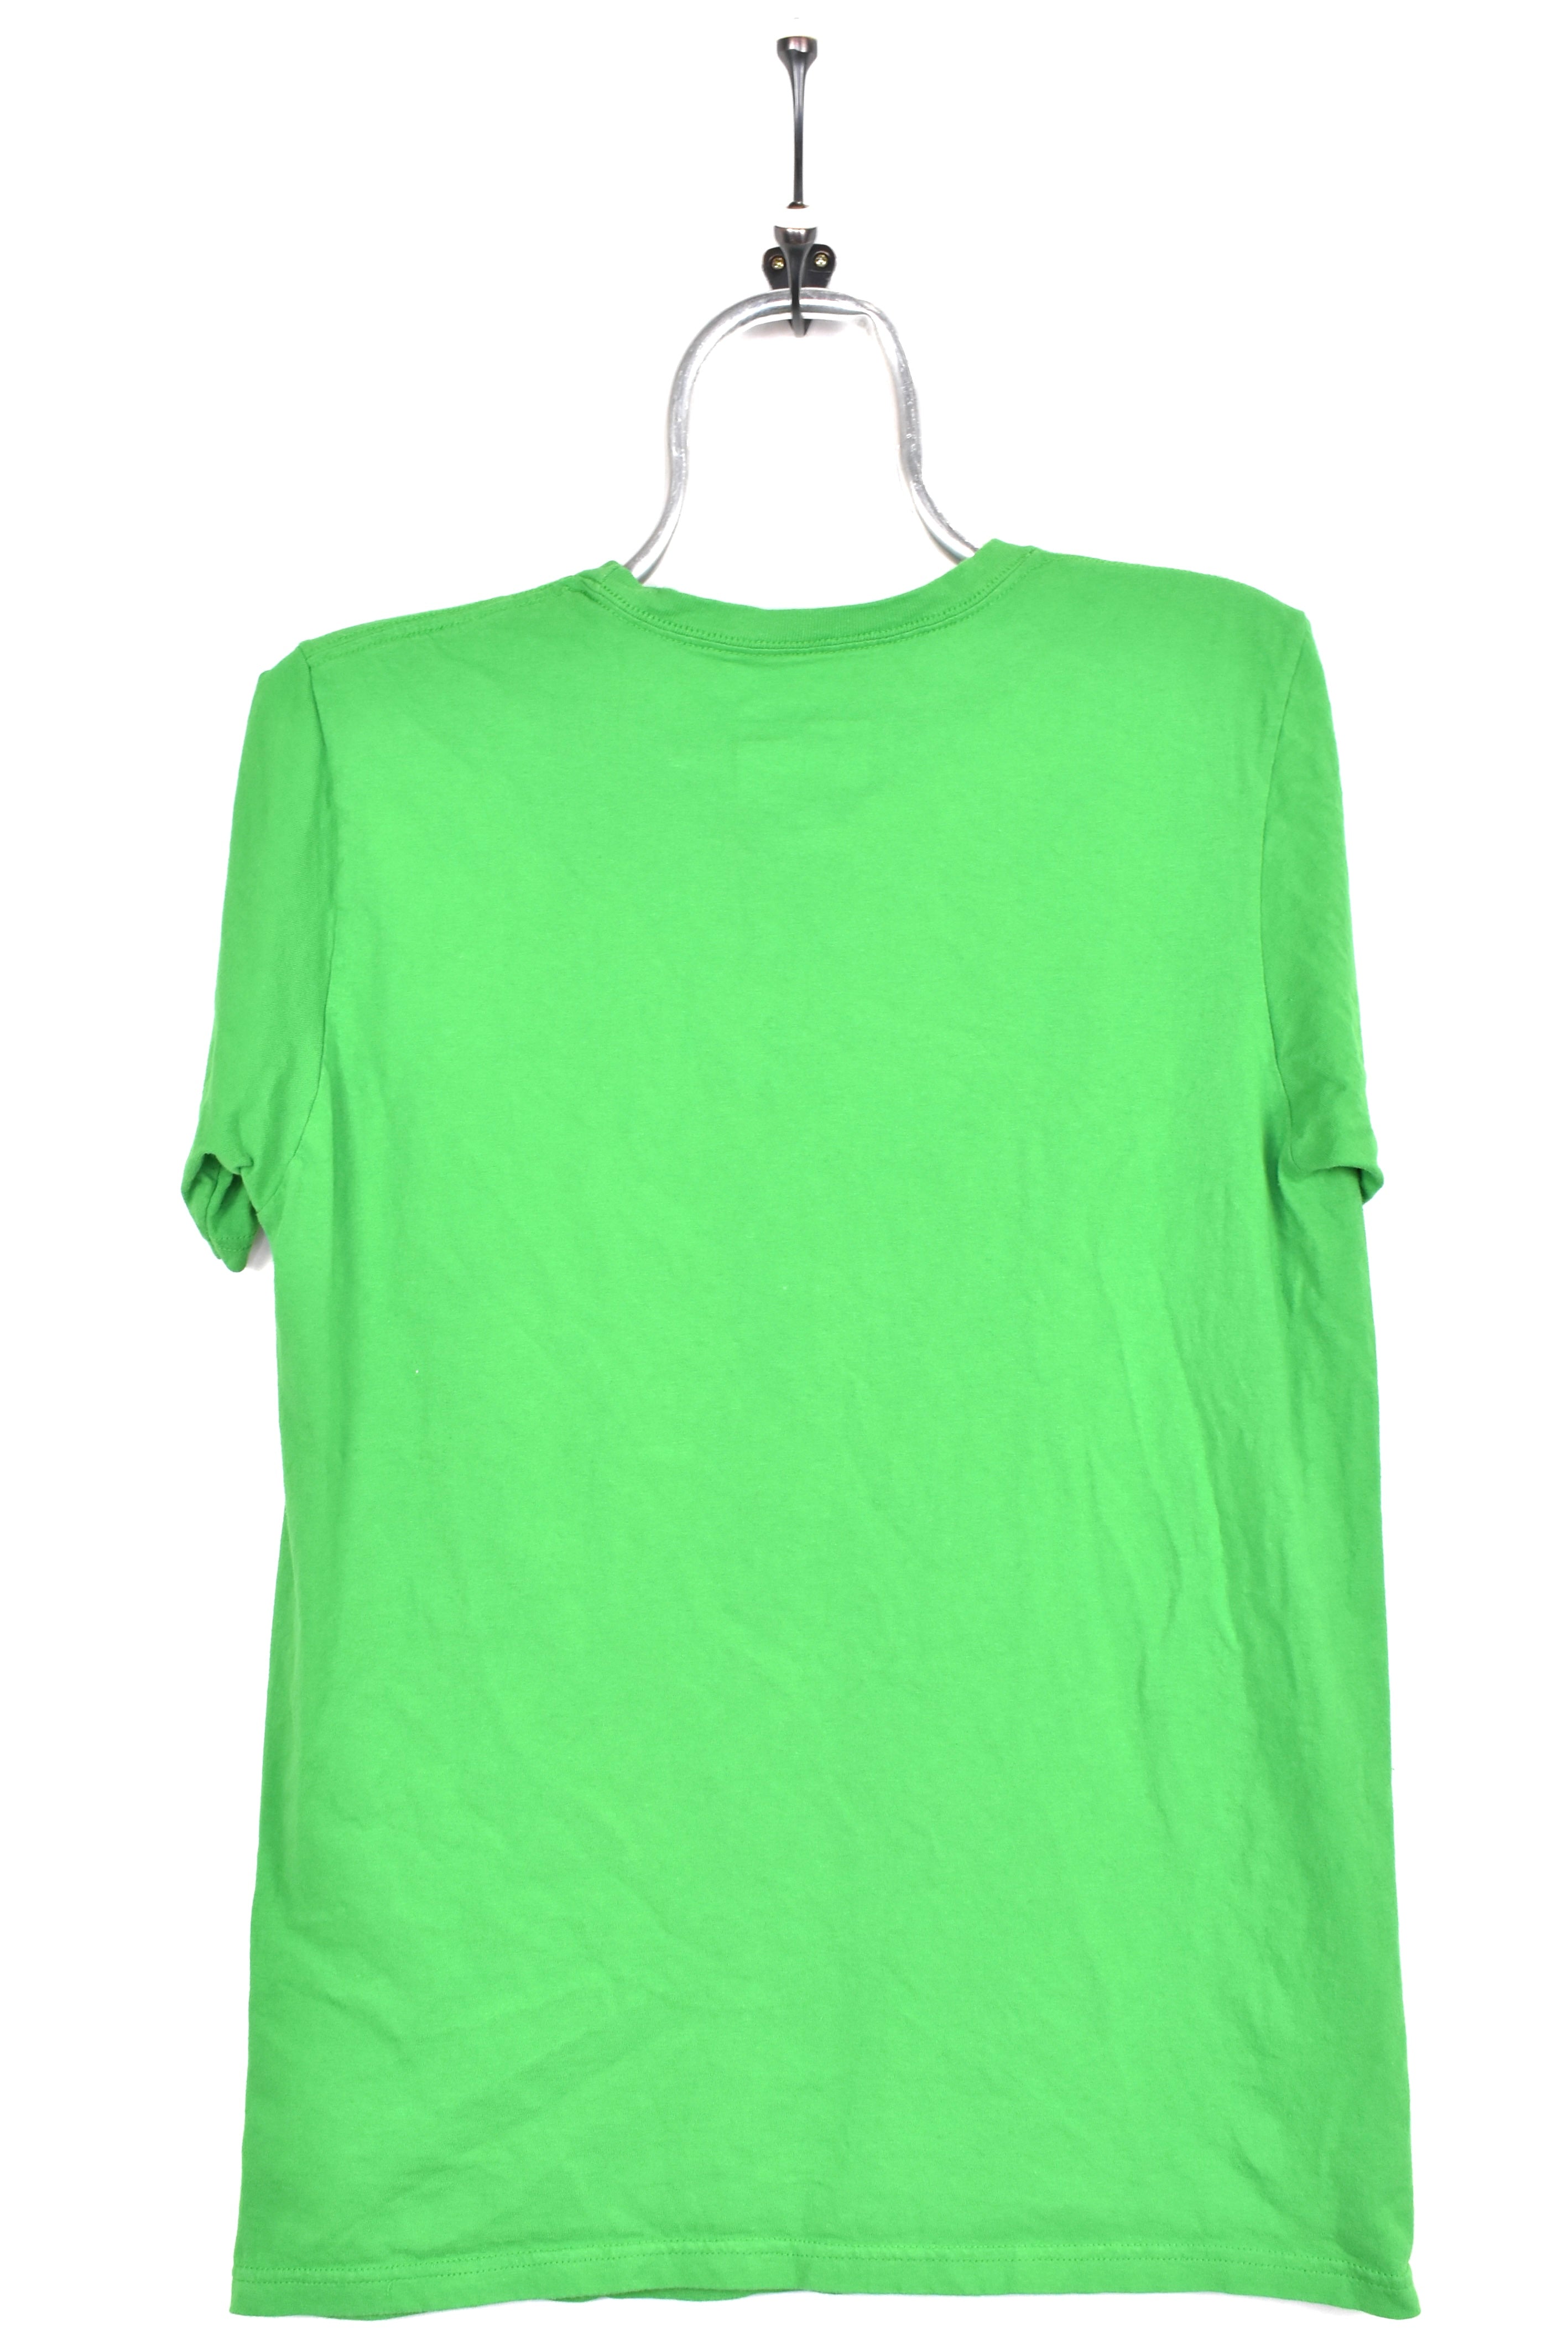 Women's modern Adidas shirt, green graphic tee - AU M ADIDAS